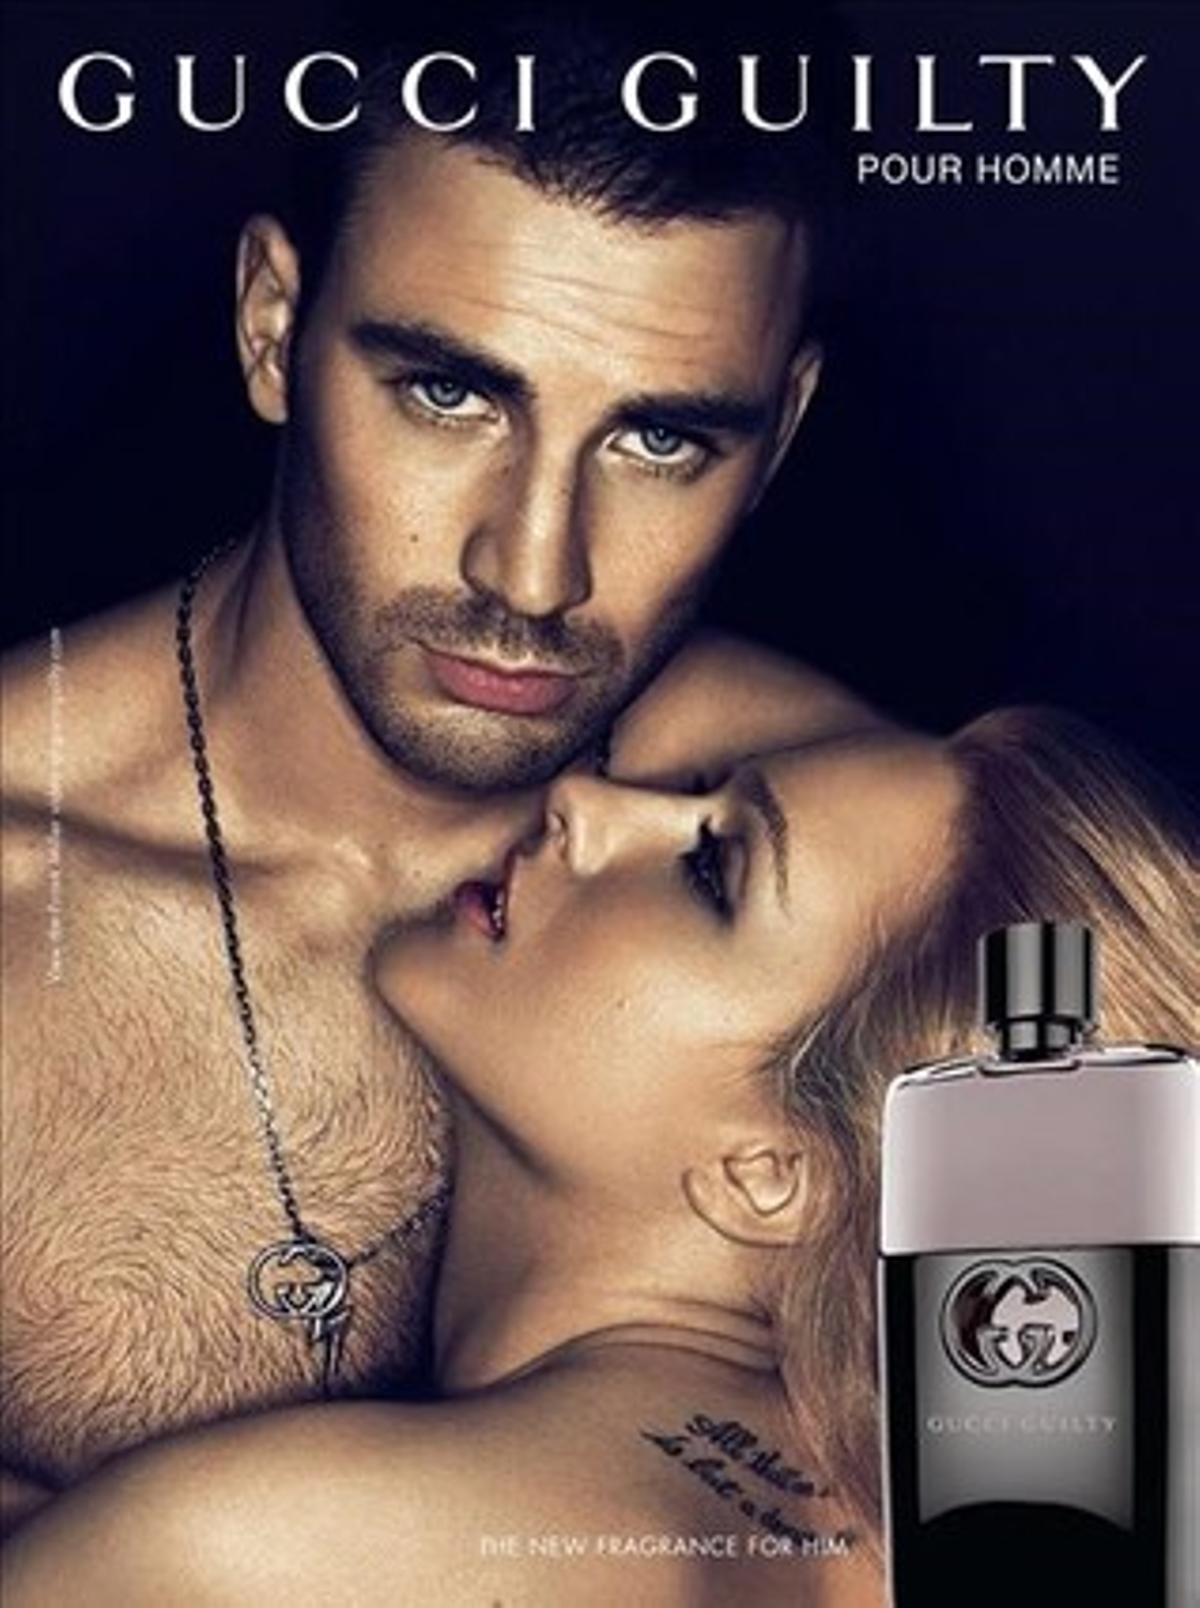 Un fotograma de un anuncio de perfume con alto conteido erótico.